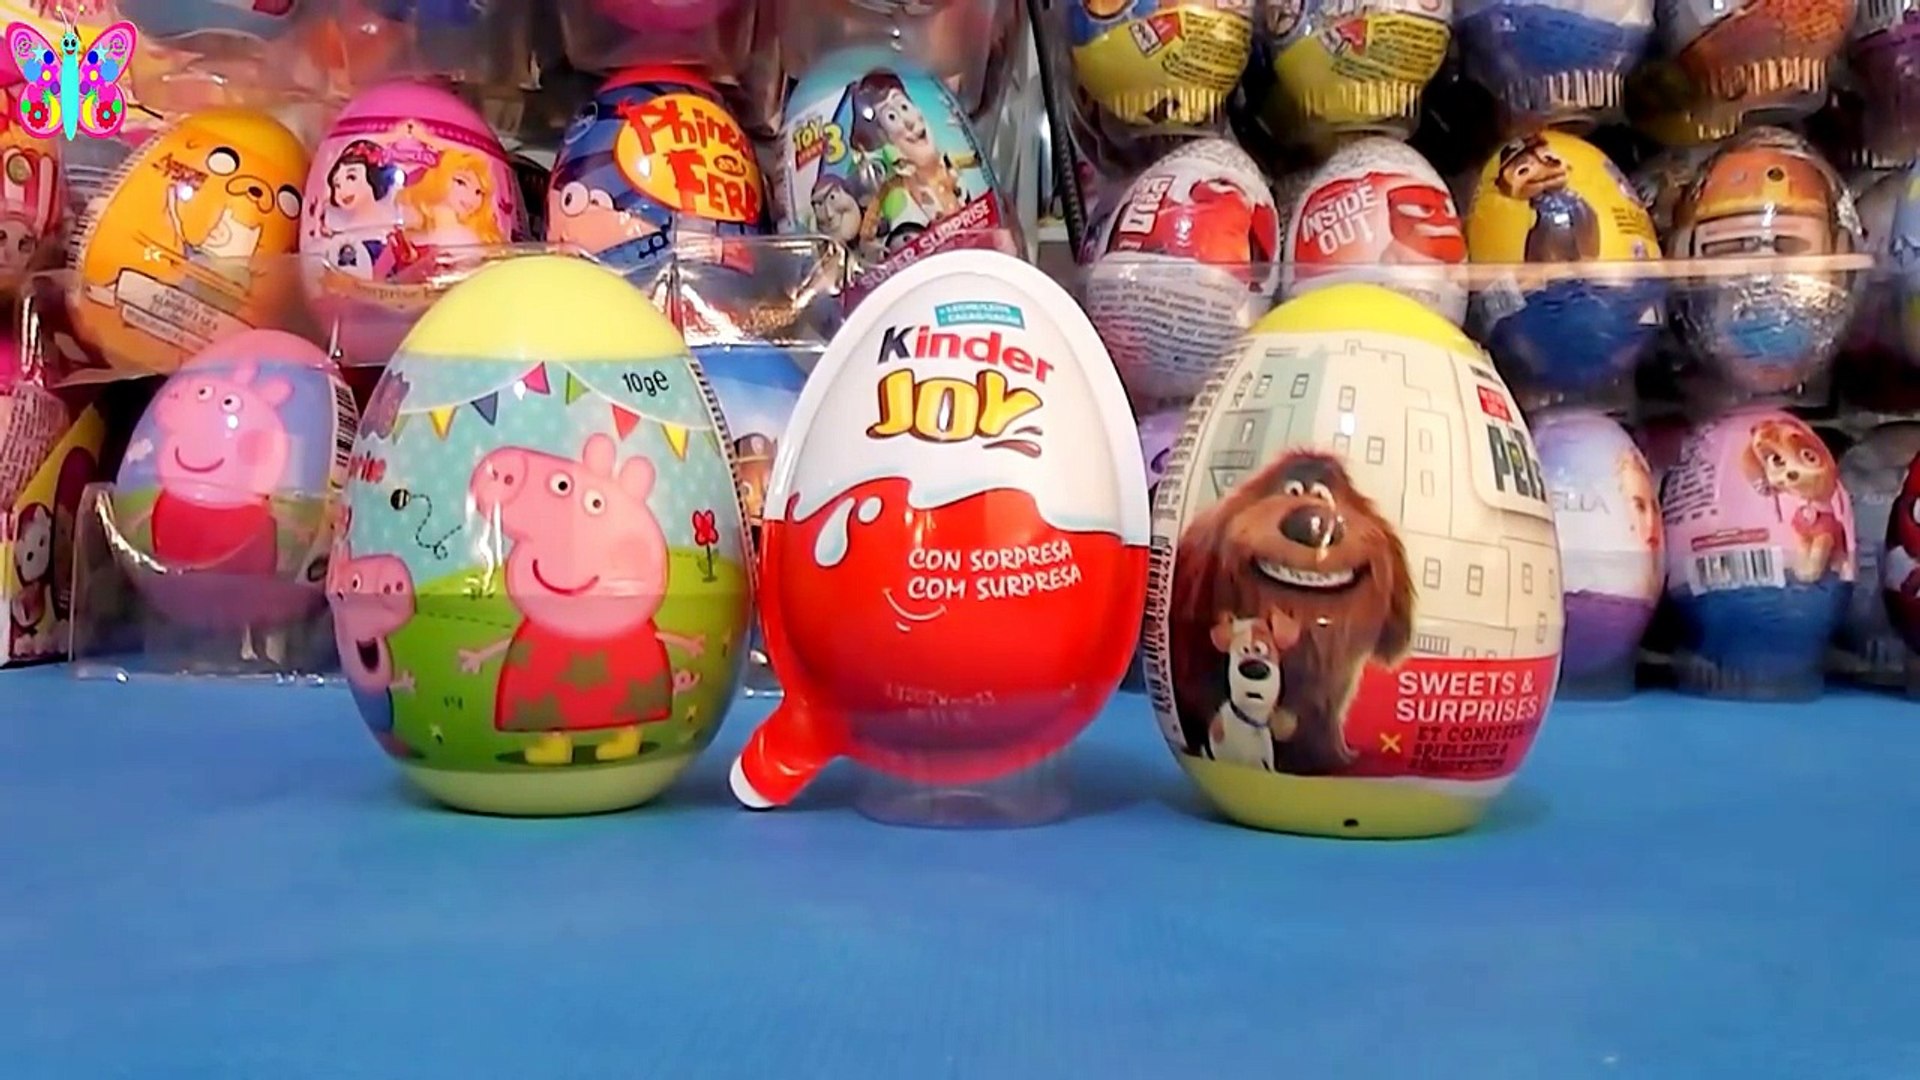 subterraneo Florecer cien Huevos sorpresas en español la vida secreta de tus mascotas, huevos kinder,  de peppa pig videos 2016 - video Dailymotion